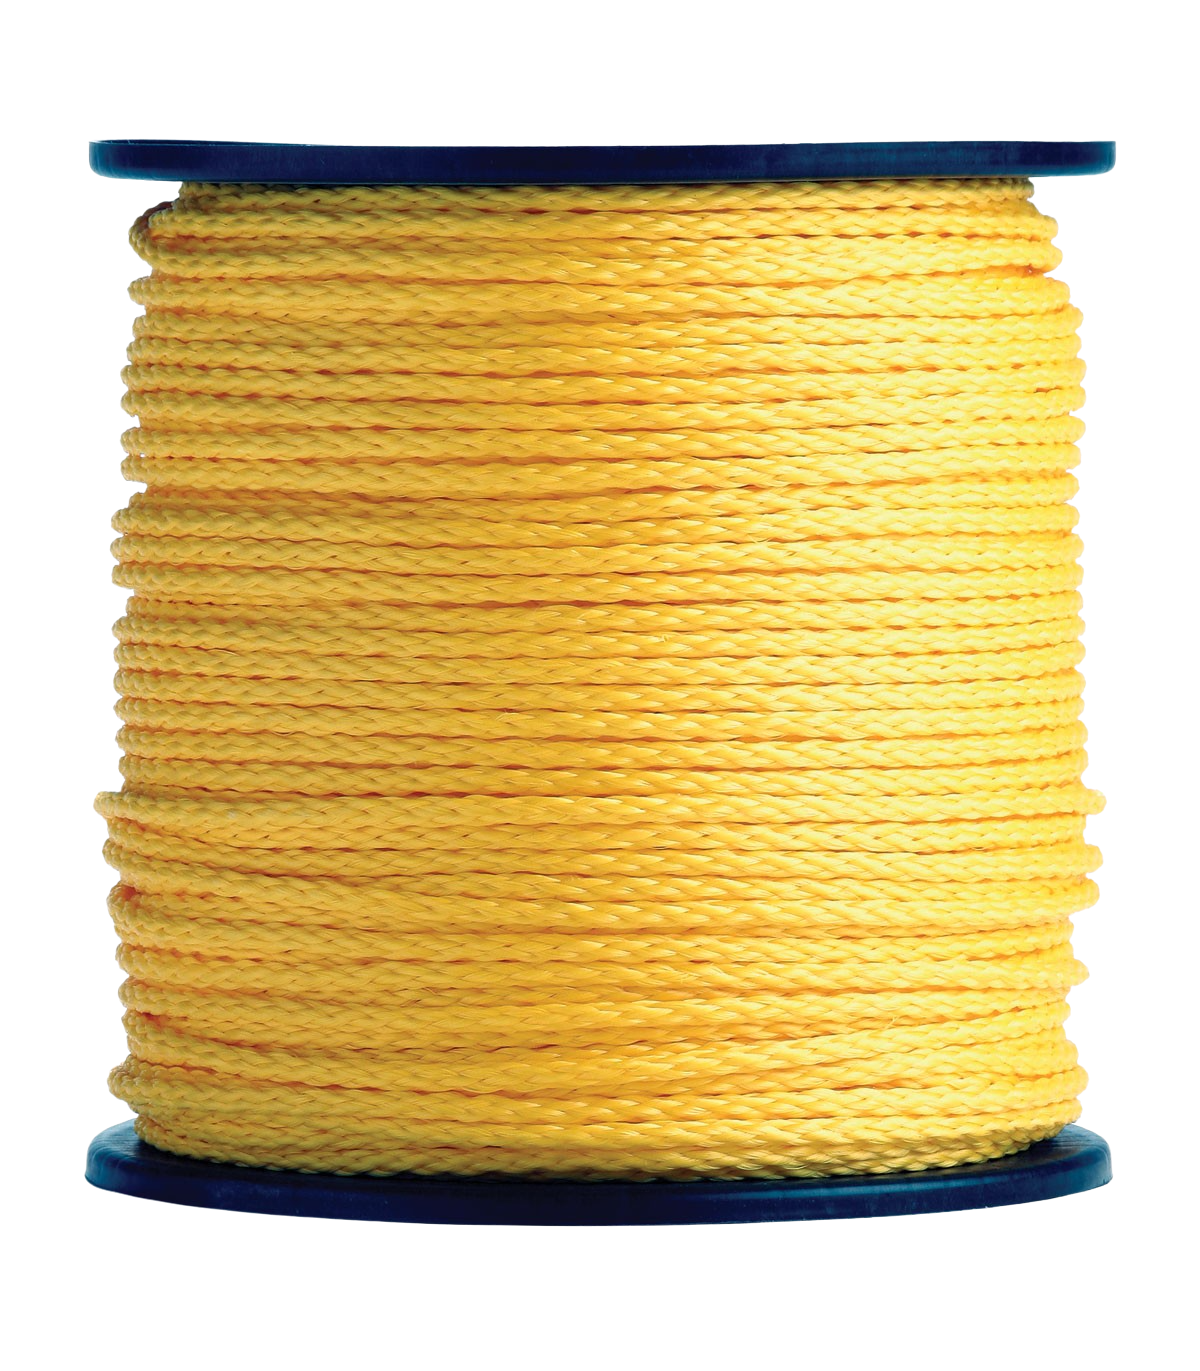 Solid Braid Cotton Sash Cord - Erin Rope Corporation